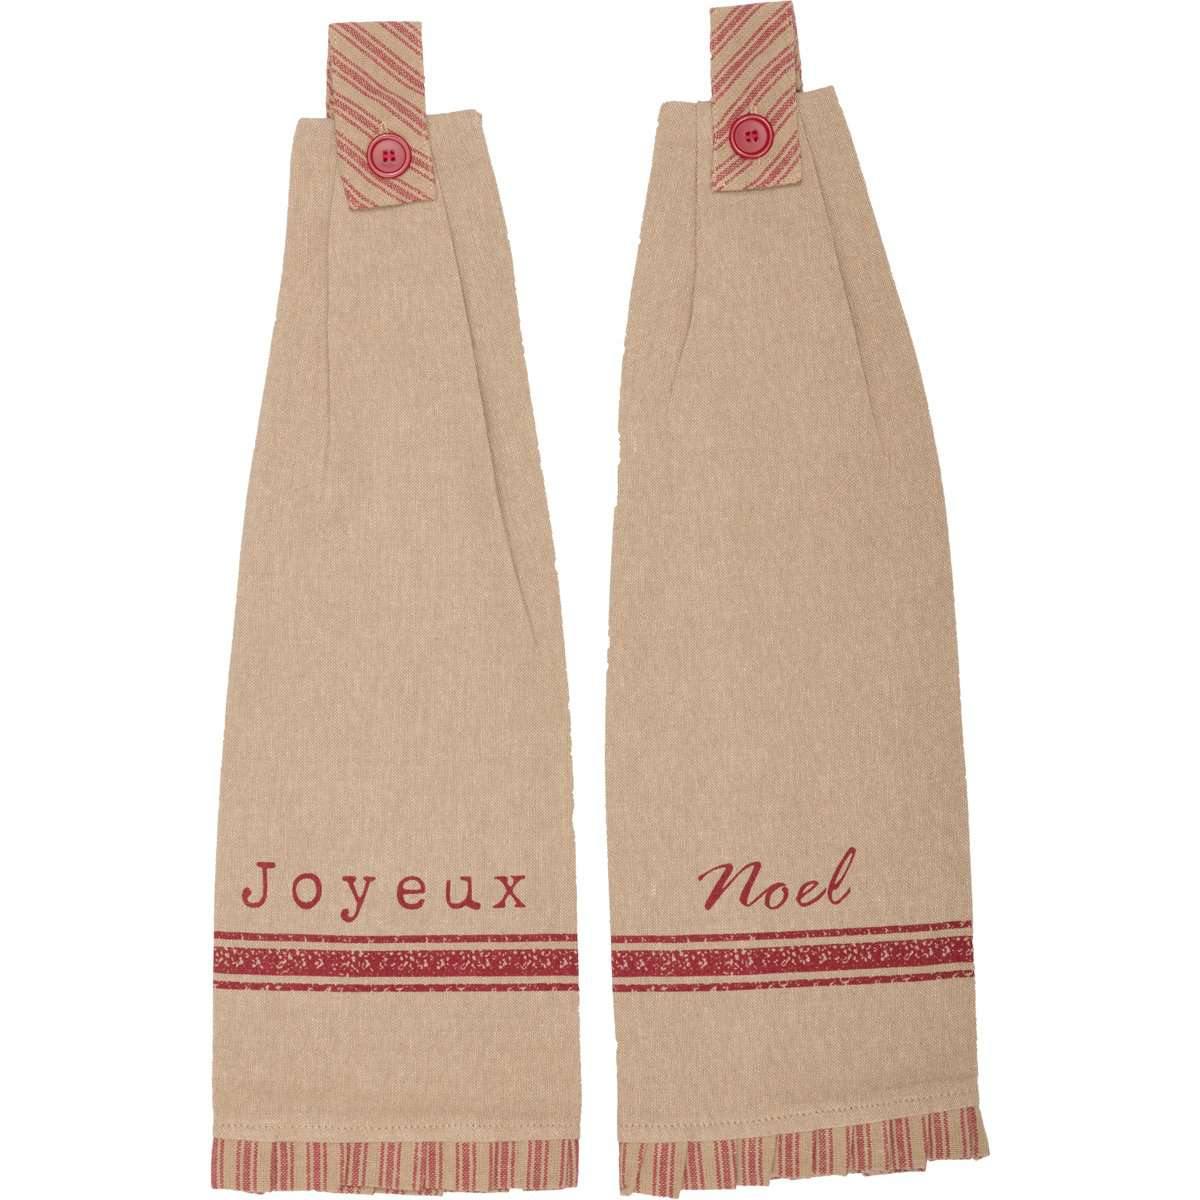 Joyeux Button Loop Kitchen Towel Set of 2 VHC Brands - The Fox Decor